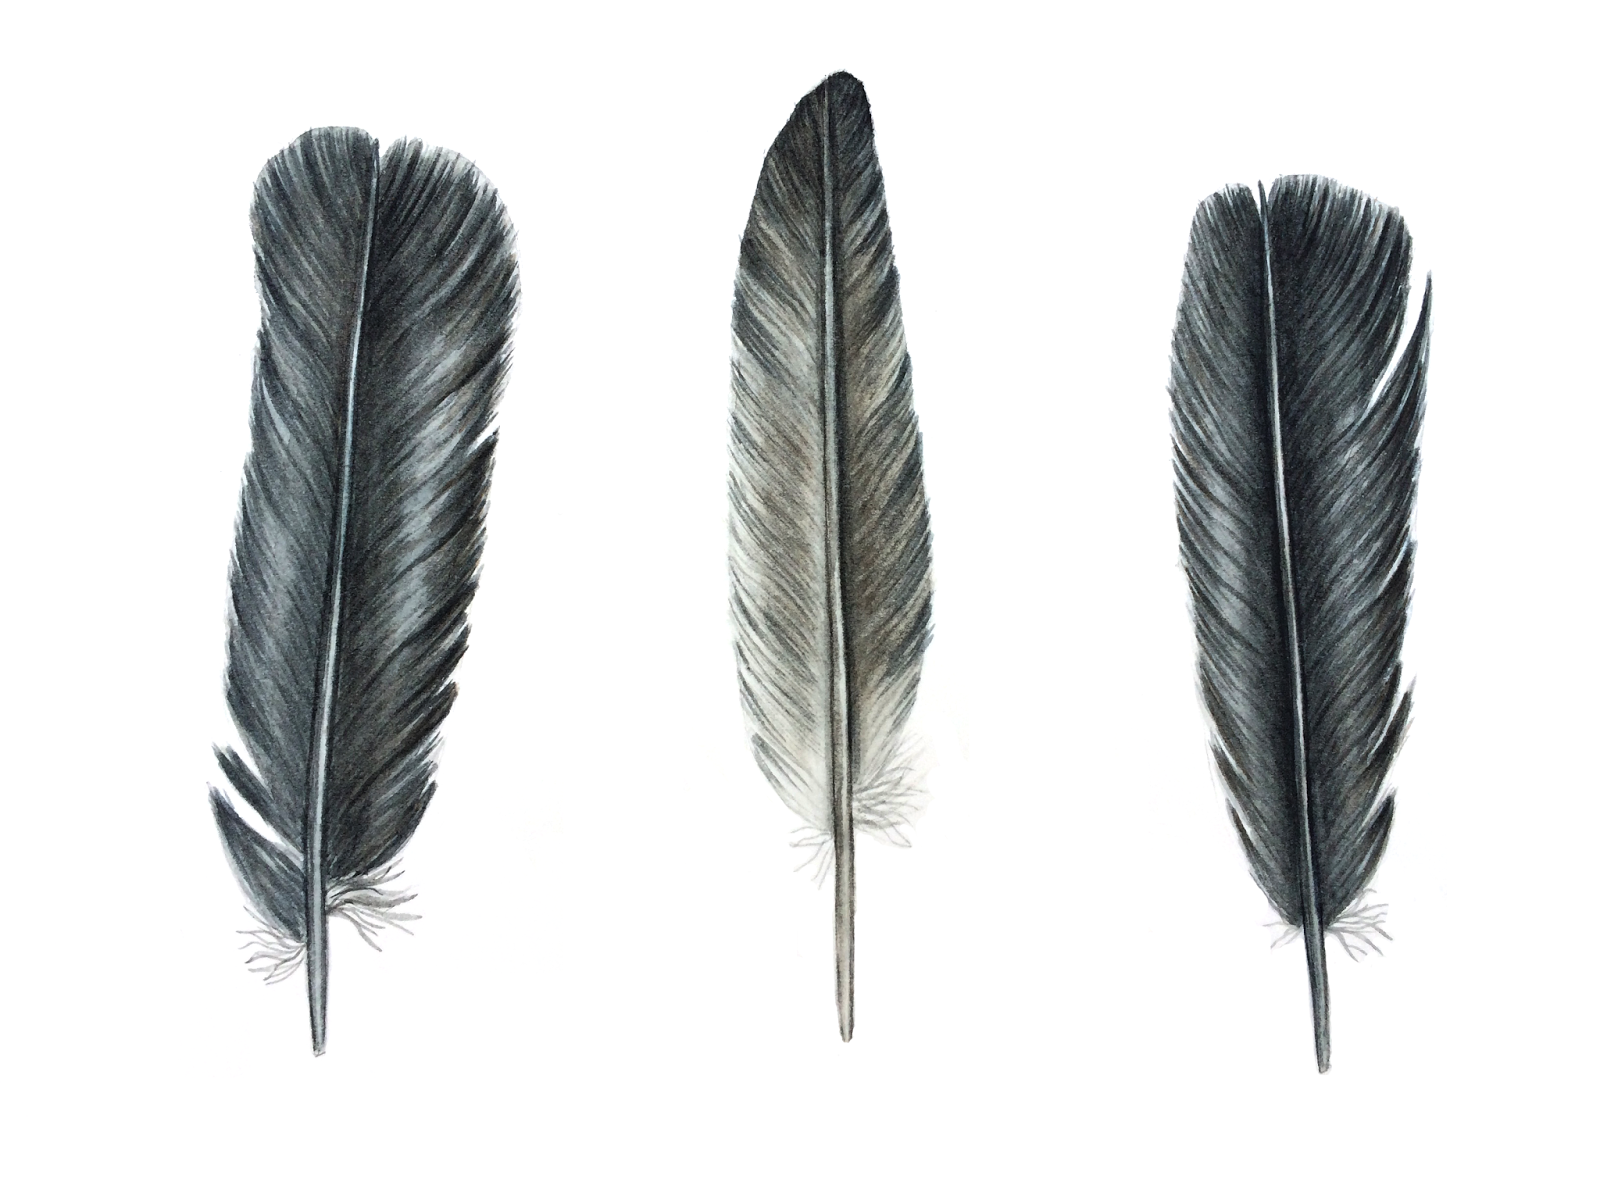 Laura Ashton : Pigeon Feathers